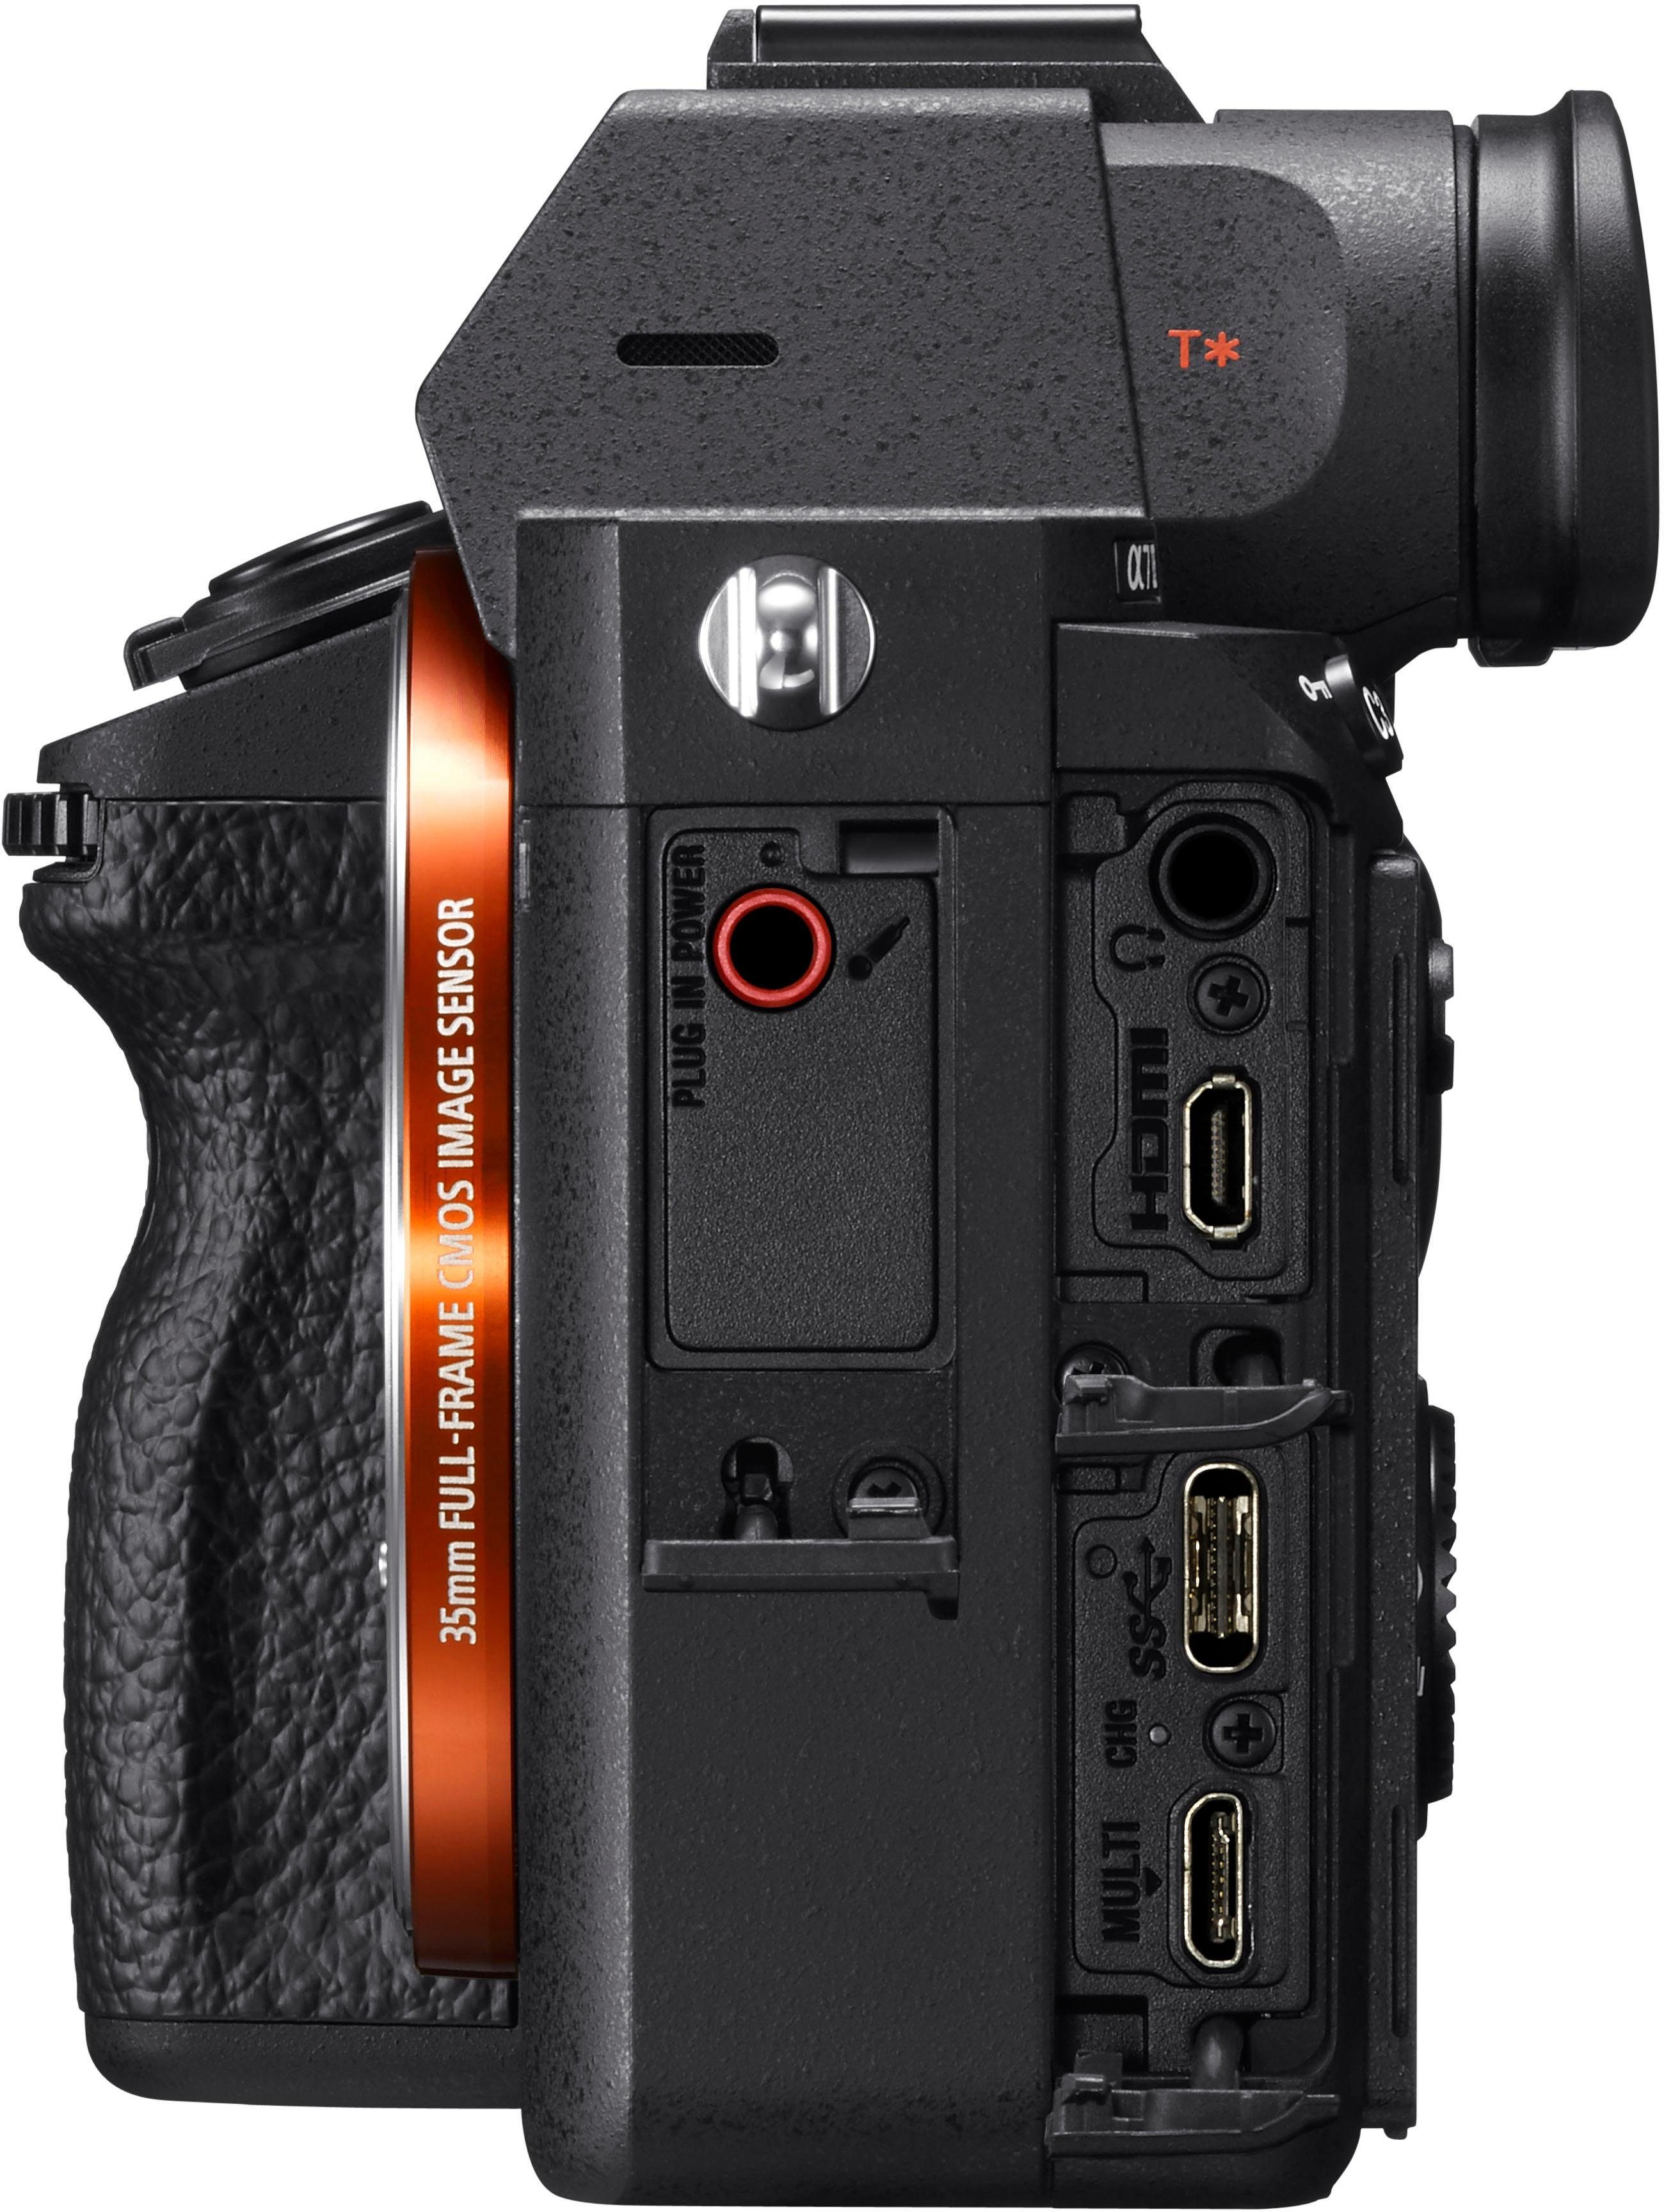 Kartenslots, Systemkamera Exmor R MP, - nur Alpha CMOS 7 Sony III 2 (24,2 ILCE-7M3B Gehäuse) E-Mount Vollformatsensor,